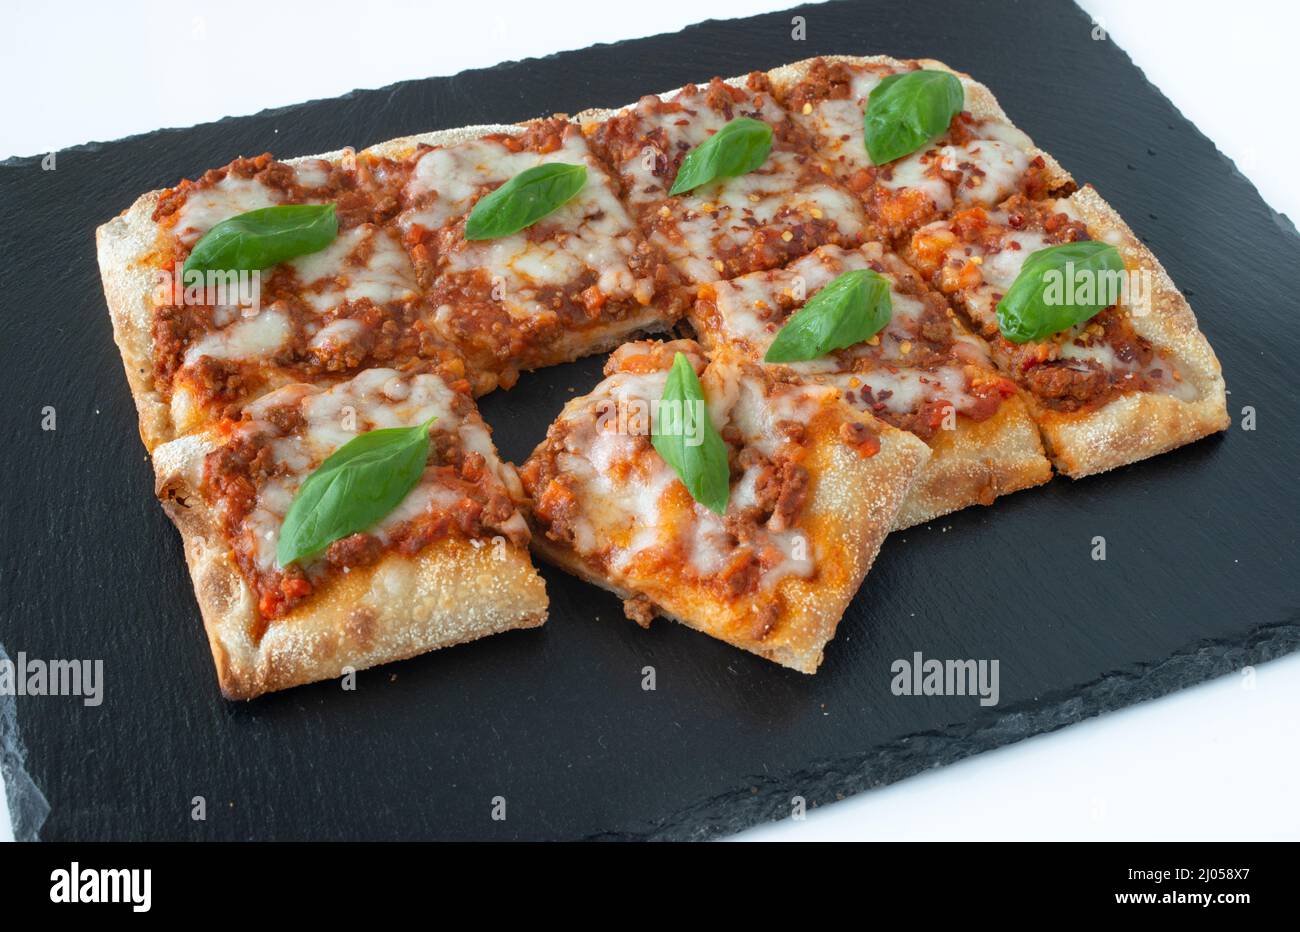 Sour dough Pizza A Taglio on black stone background Stock Photo